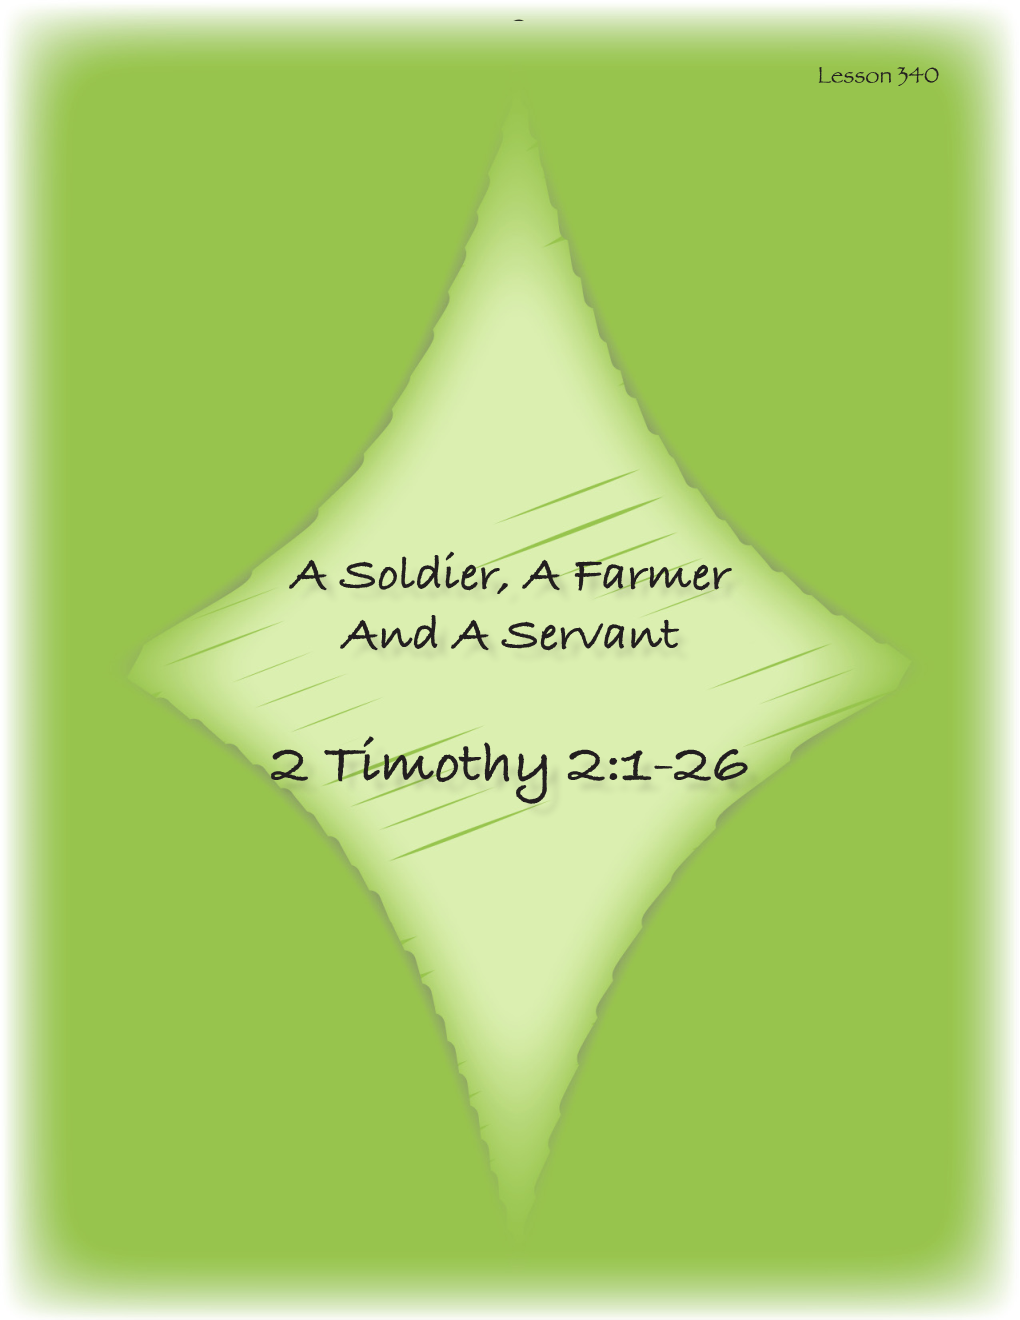 2 Timothy 2:1-26